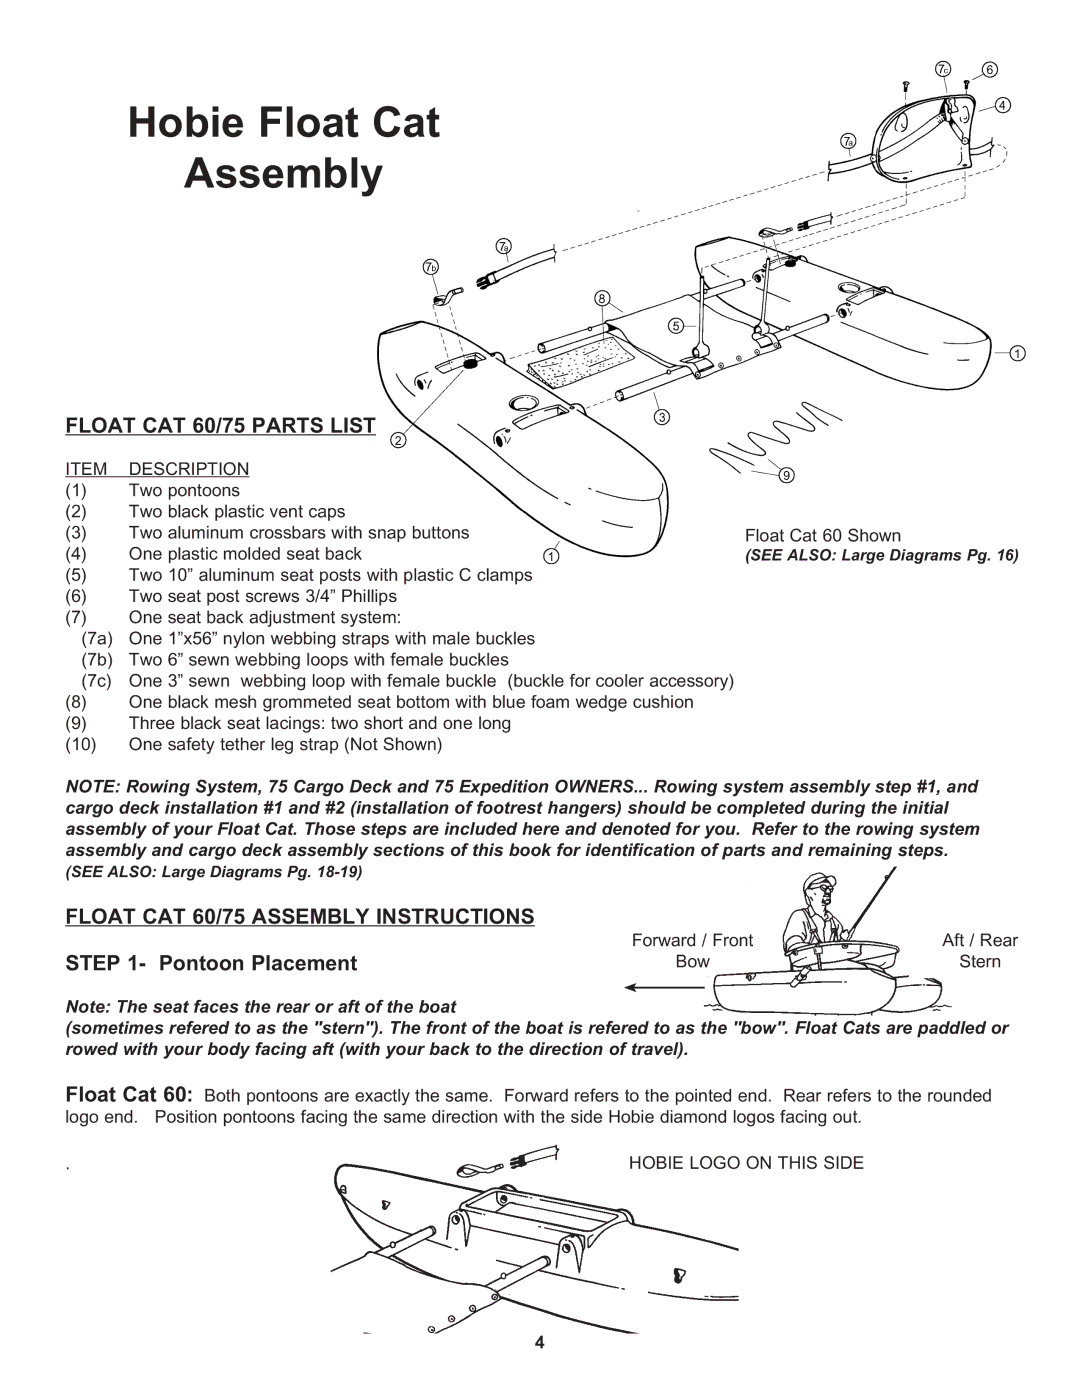 Hobie 60 manual Hobie Float Cat Assembly, Pontoon Placement 